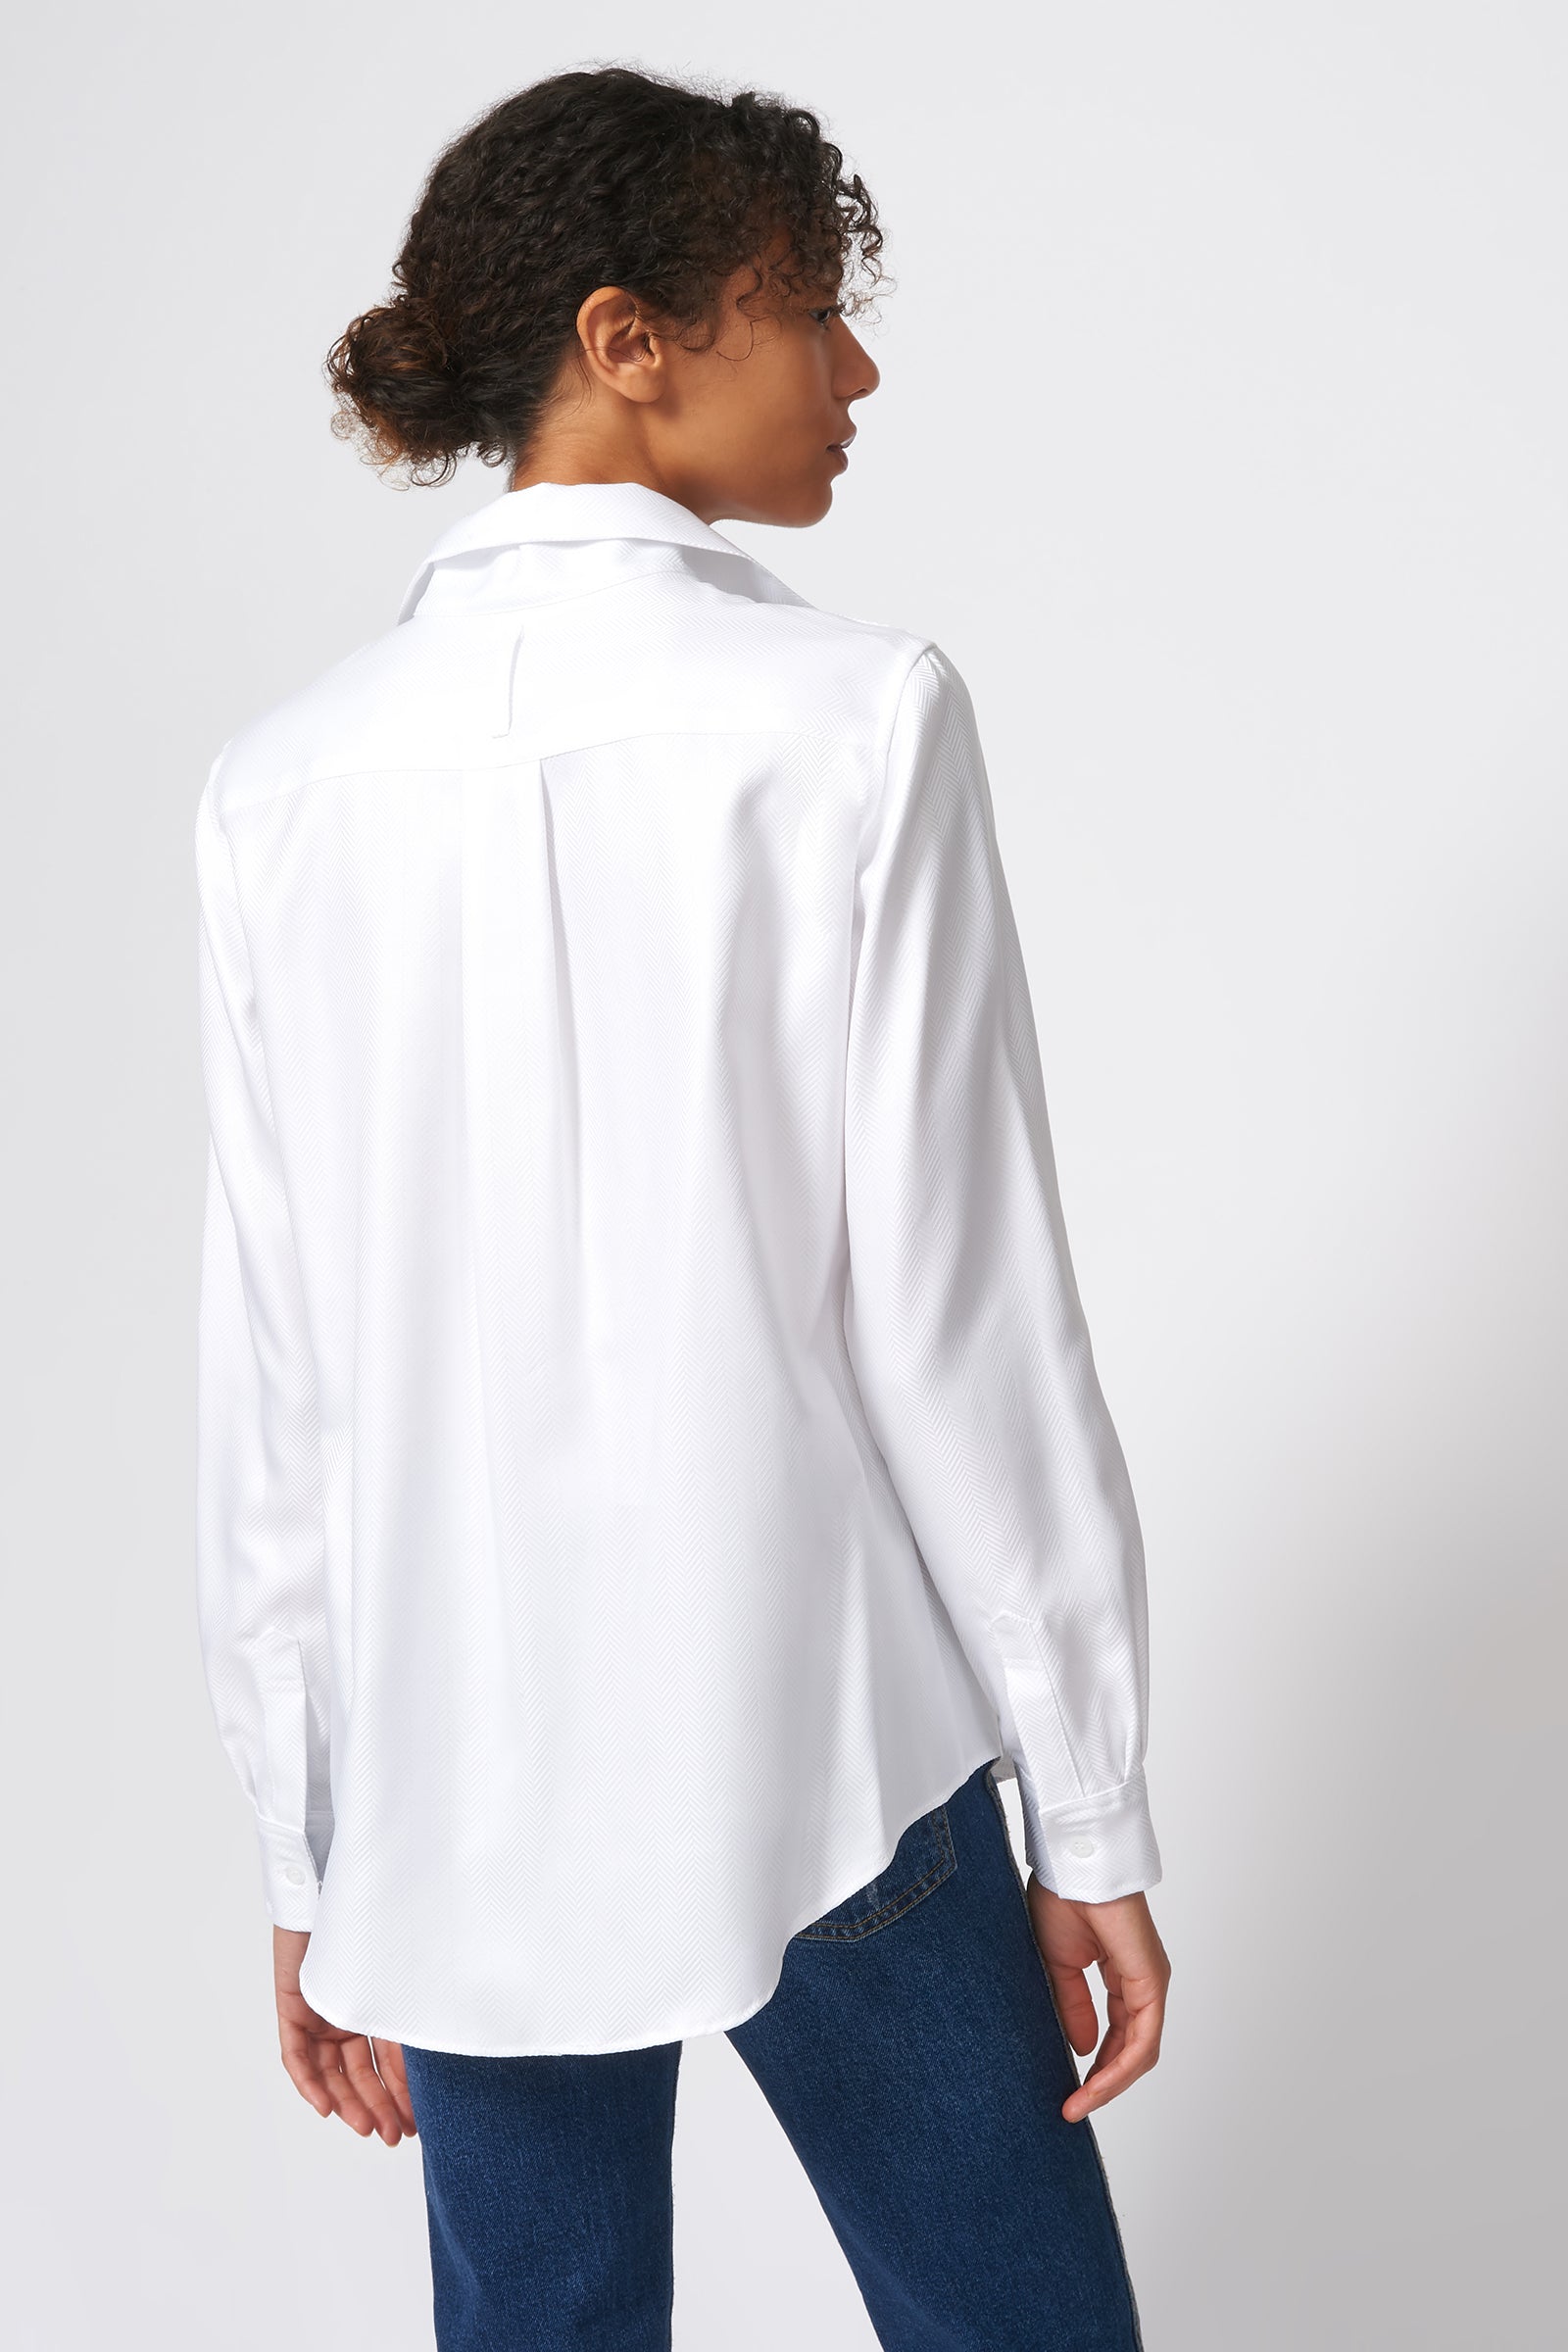 Kal Rieman Ginna Box Pleat Shirt in White Herringbone on Model Back View